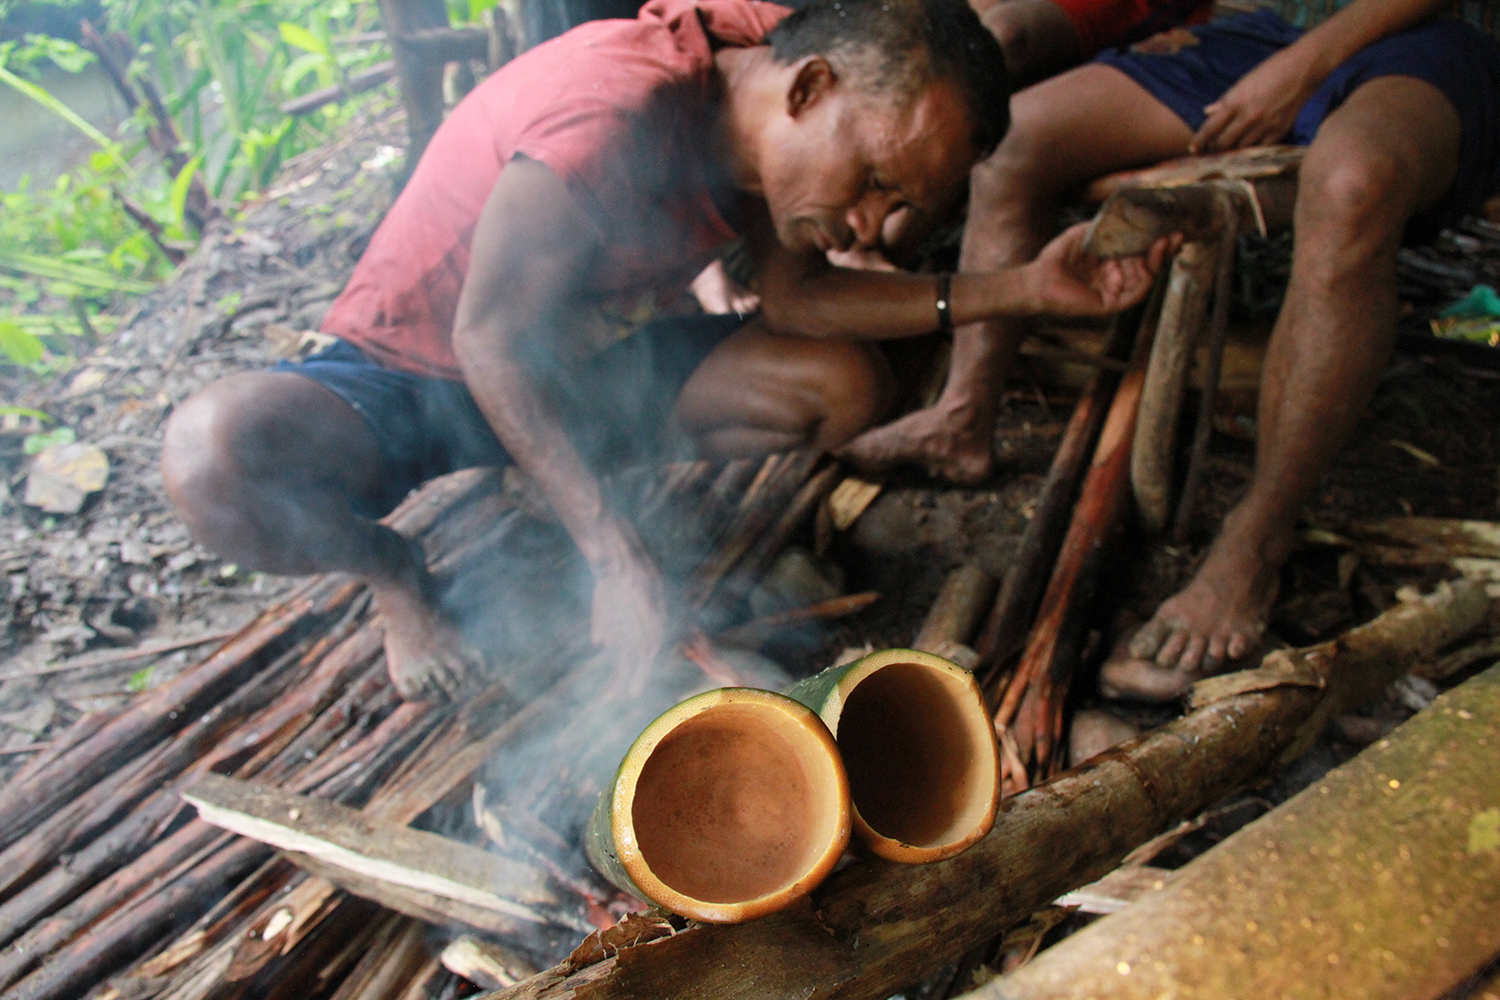 Proses masak di dalam bambu orang Tobelo di hutan Halmahera. Foto: Faris Bobero/ Mongabay Indonesia